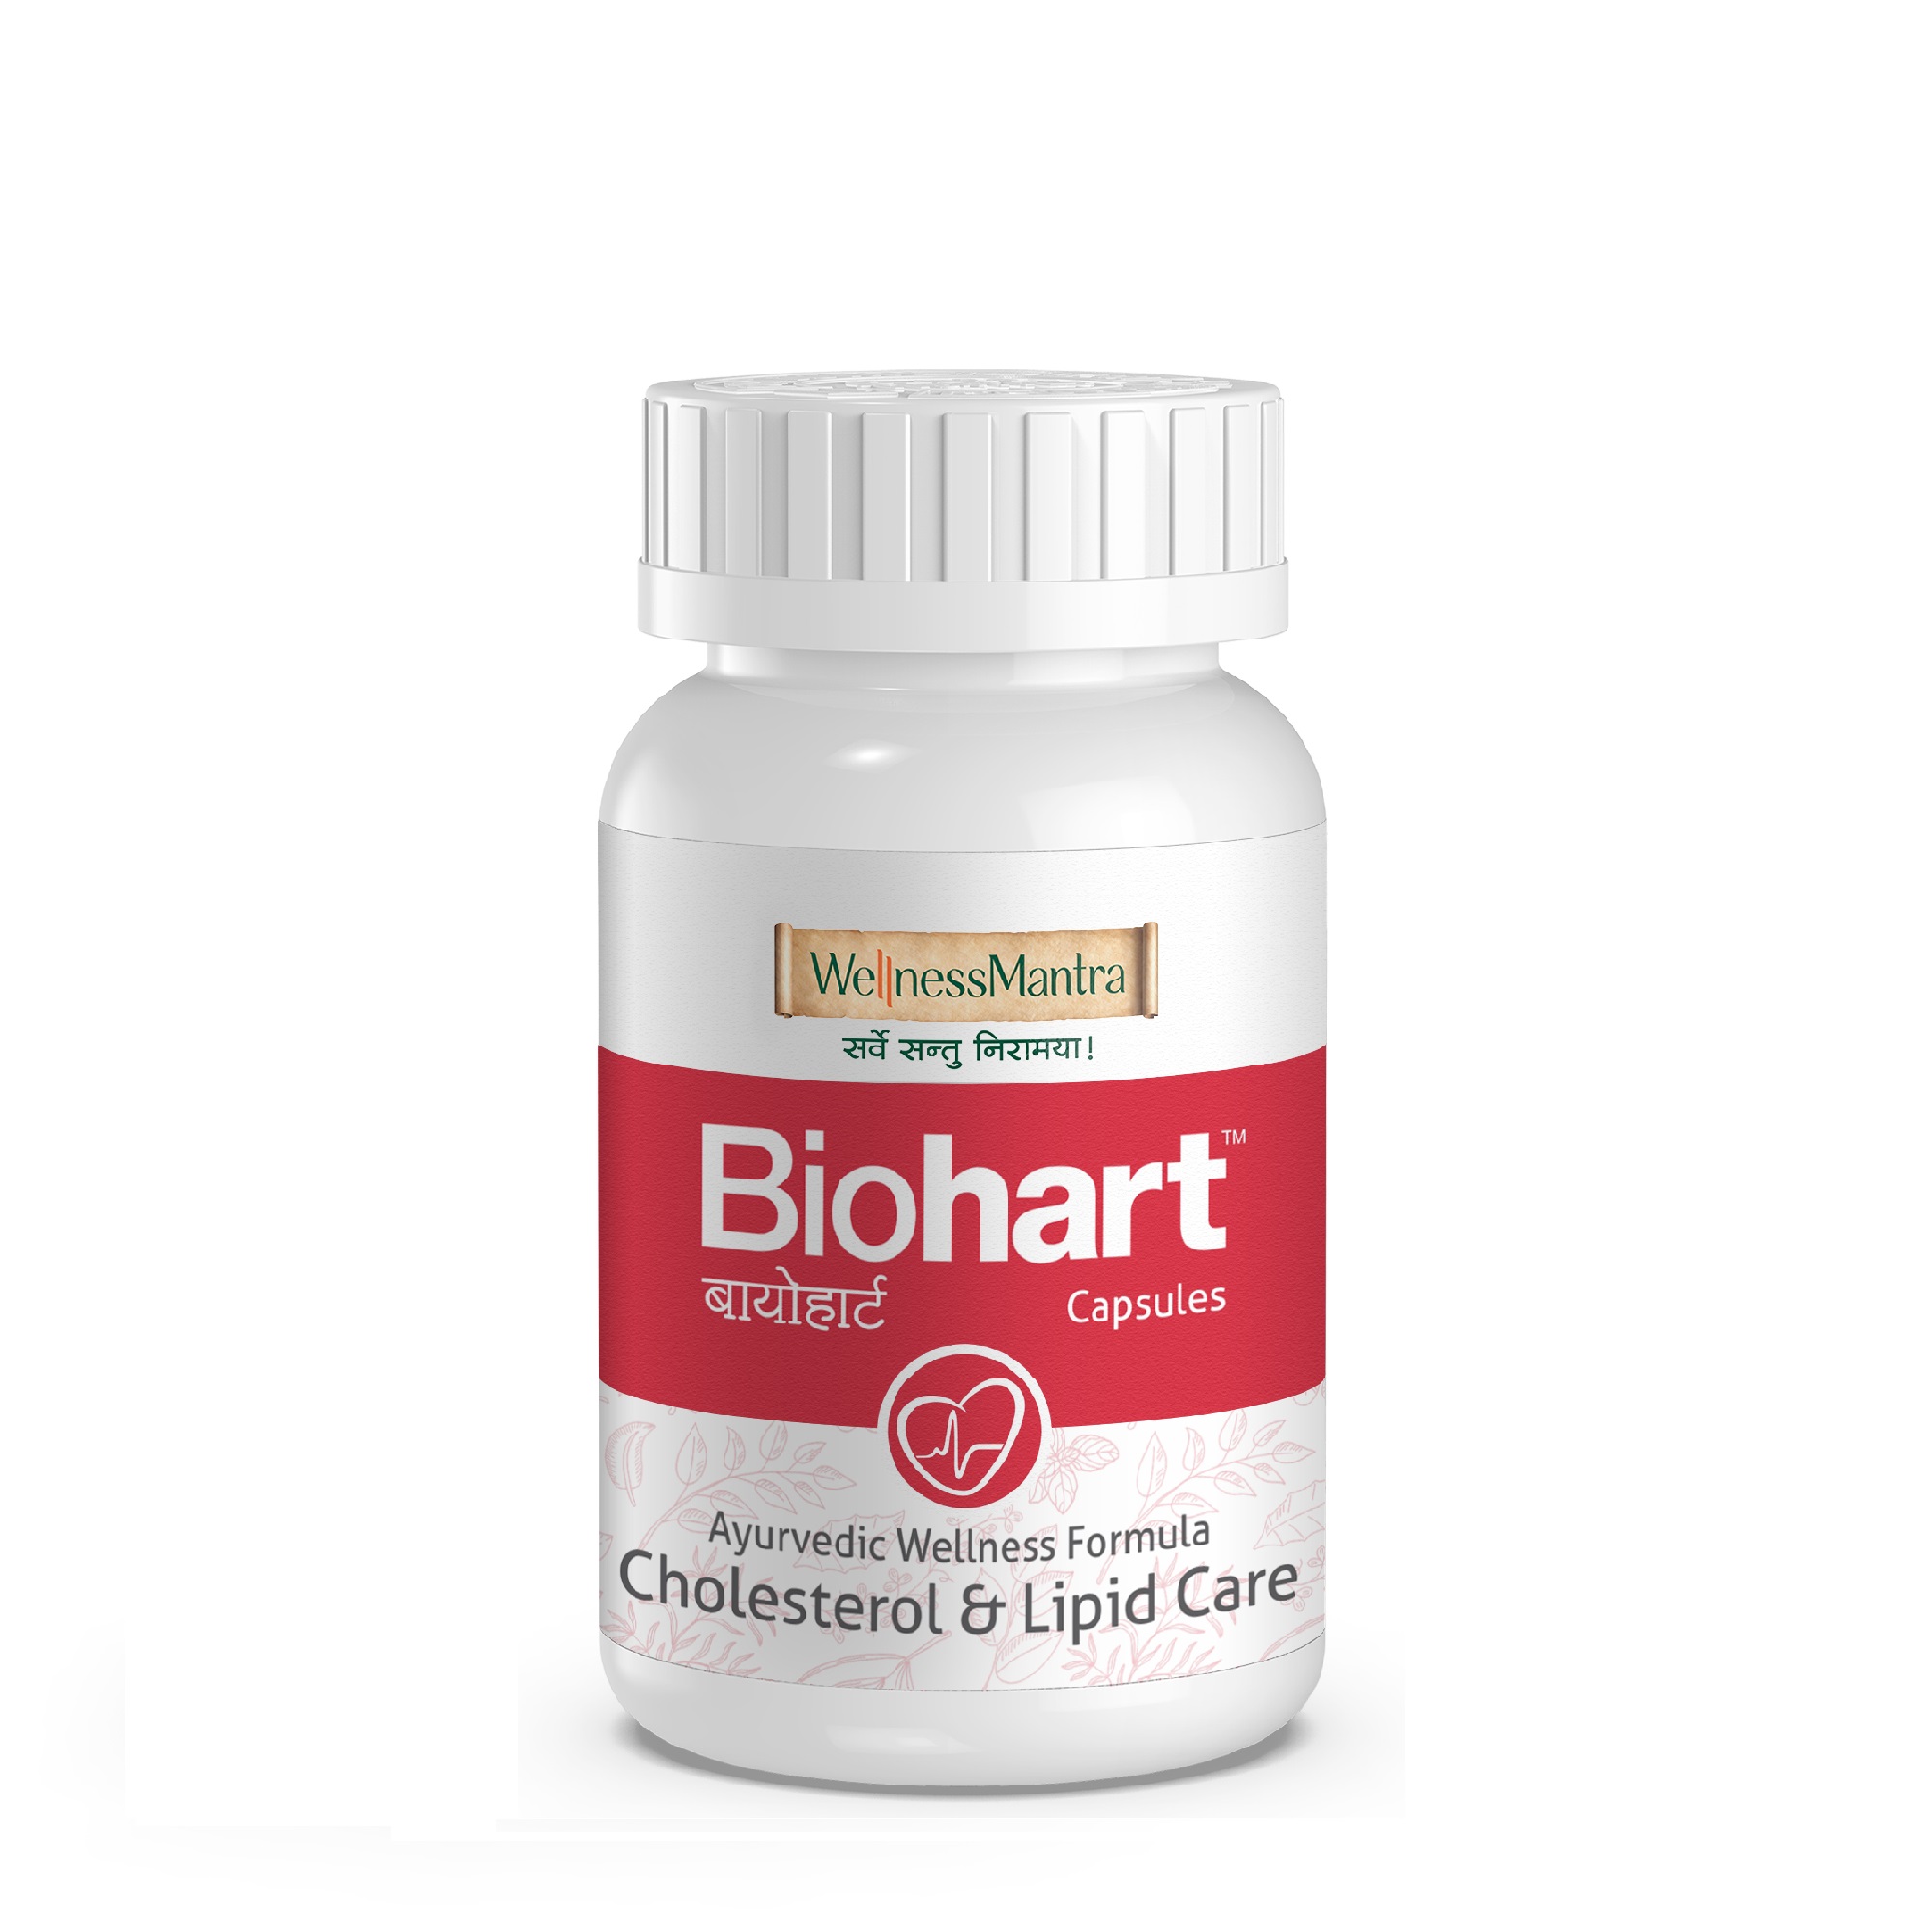 Buy Wellness Mantra Biohart Capsules at Best Price Online